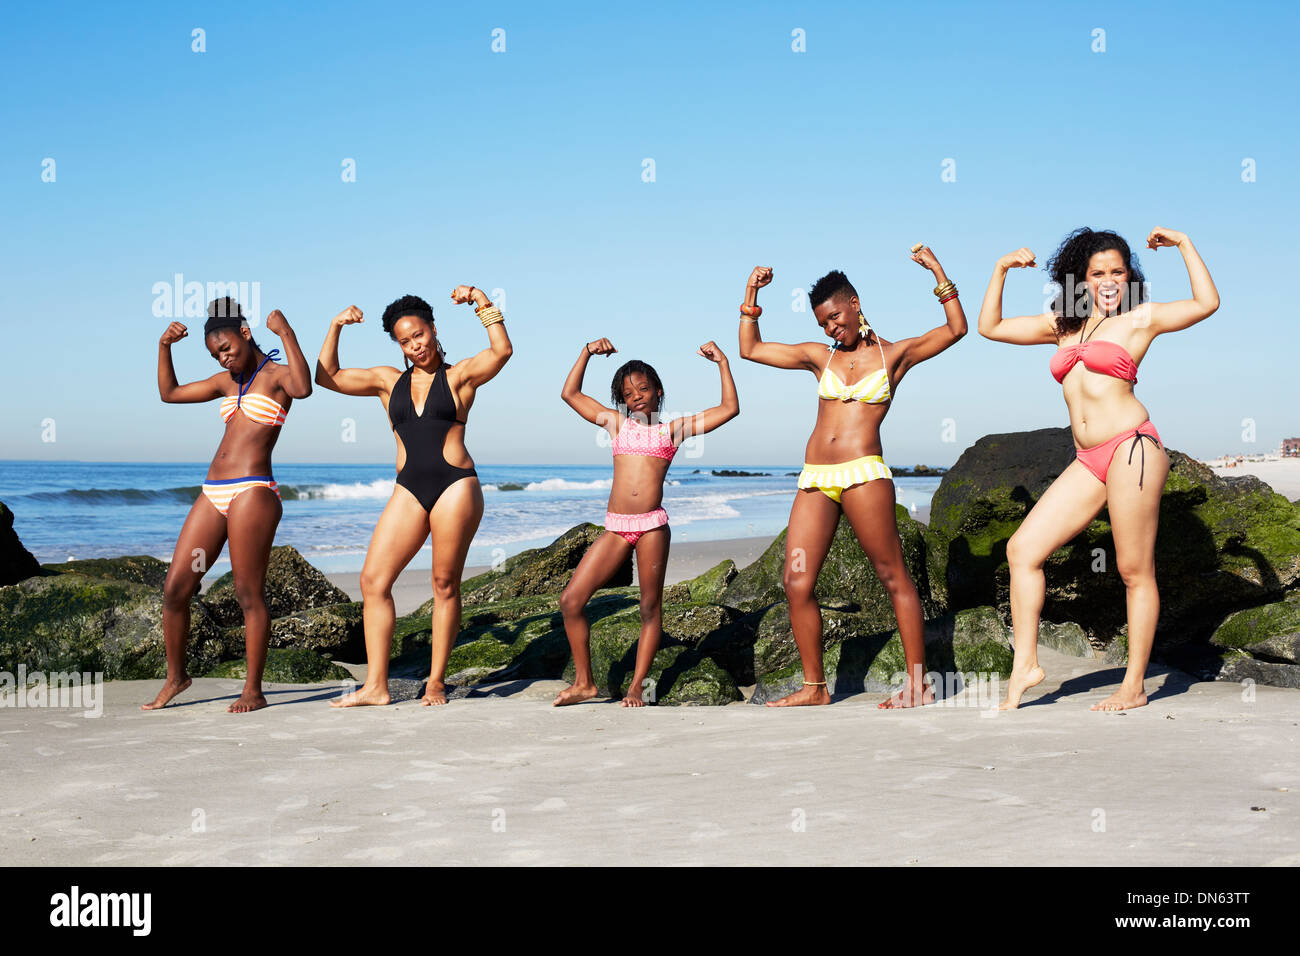 Women flexing muscles on beach Stock Photo